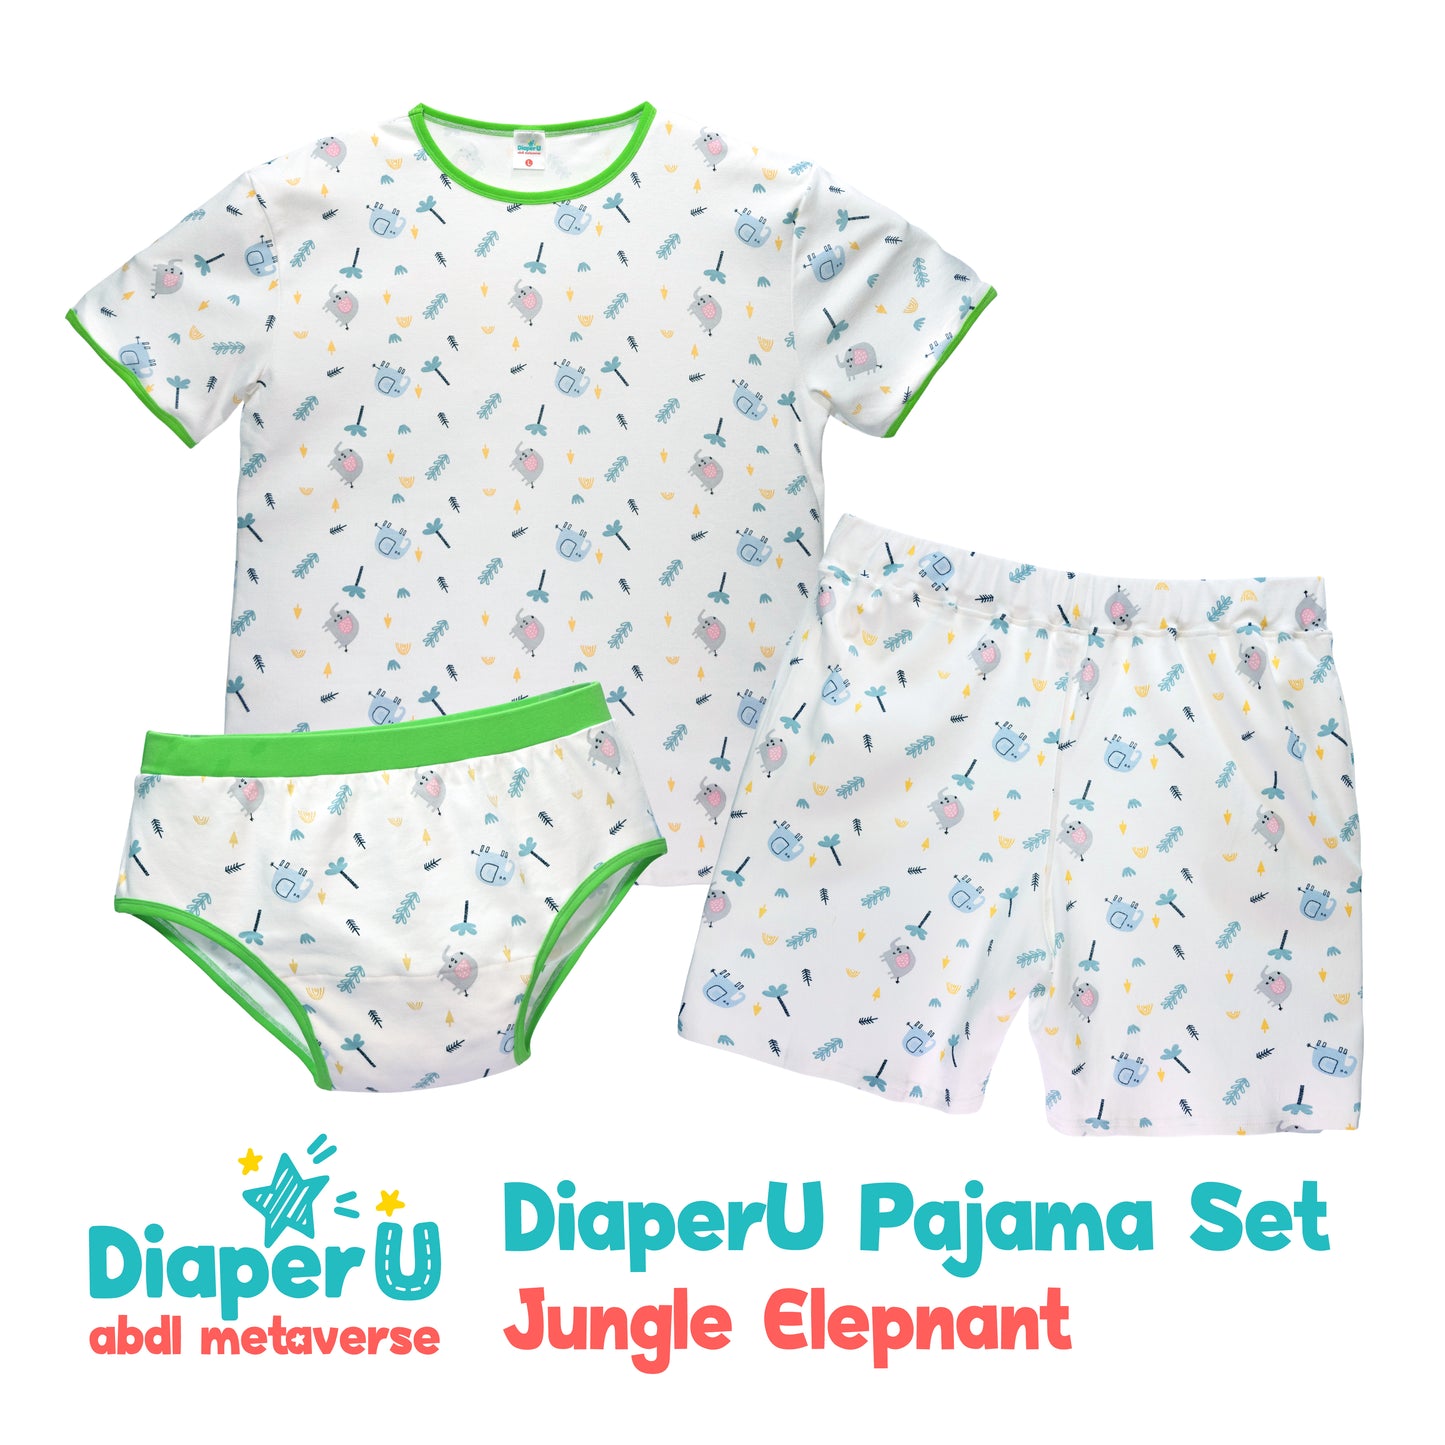 ABDL Cotton Shorts - Jungle Elephant